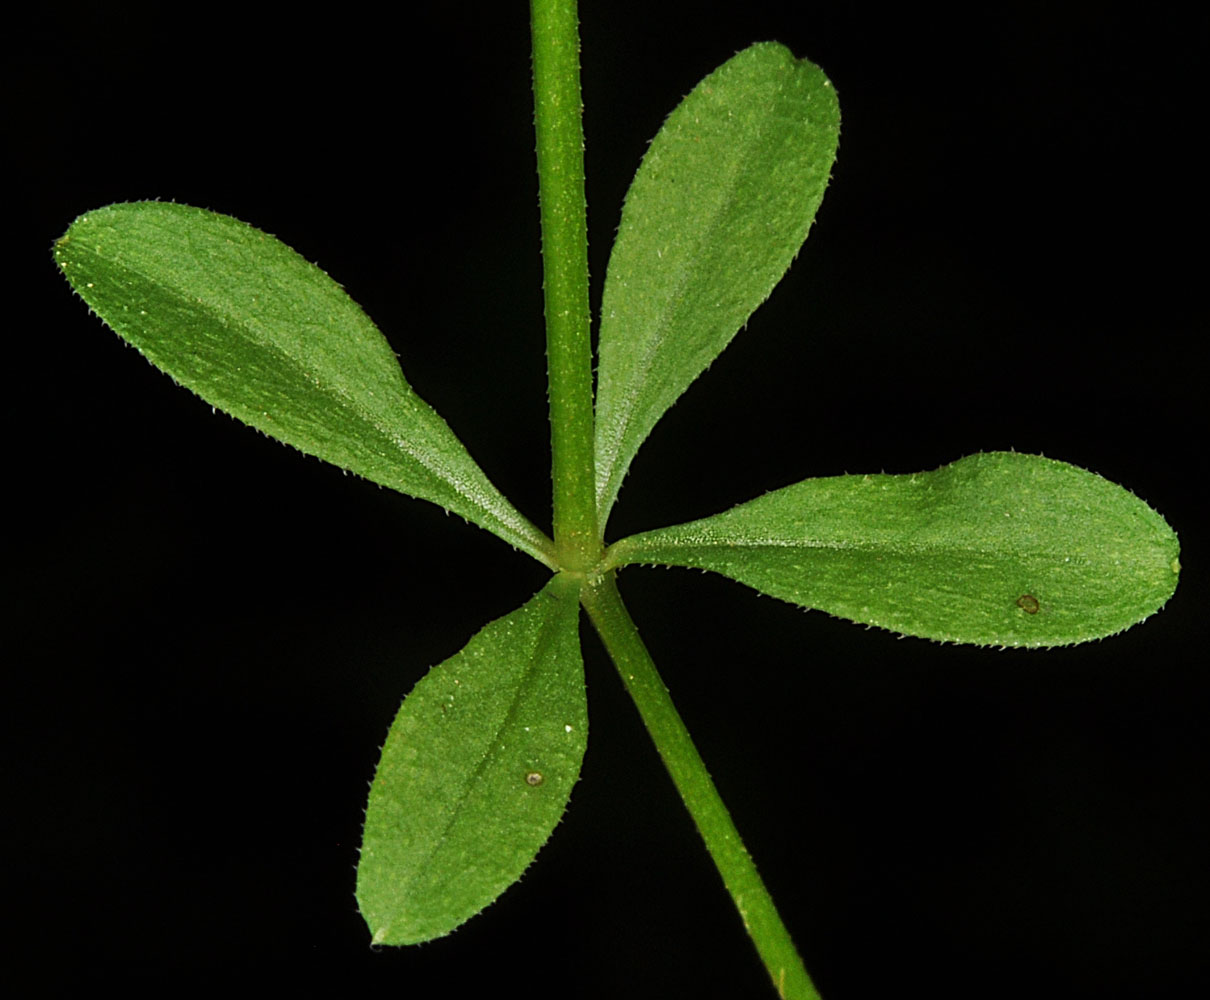 Flora of Eastern Washington Image: Galium trifidum